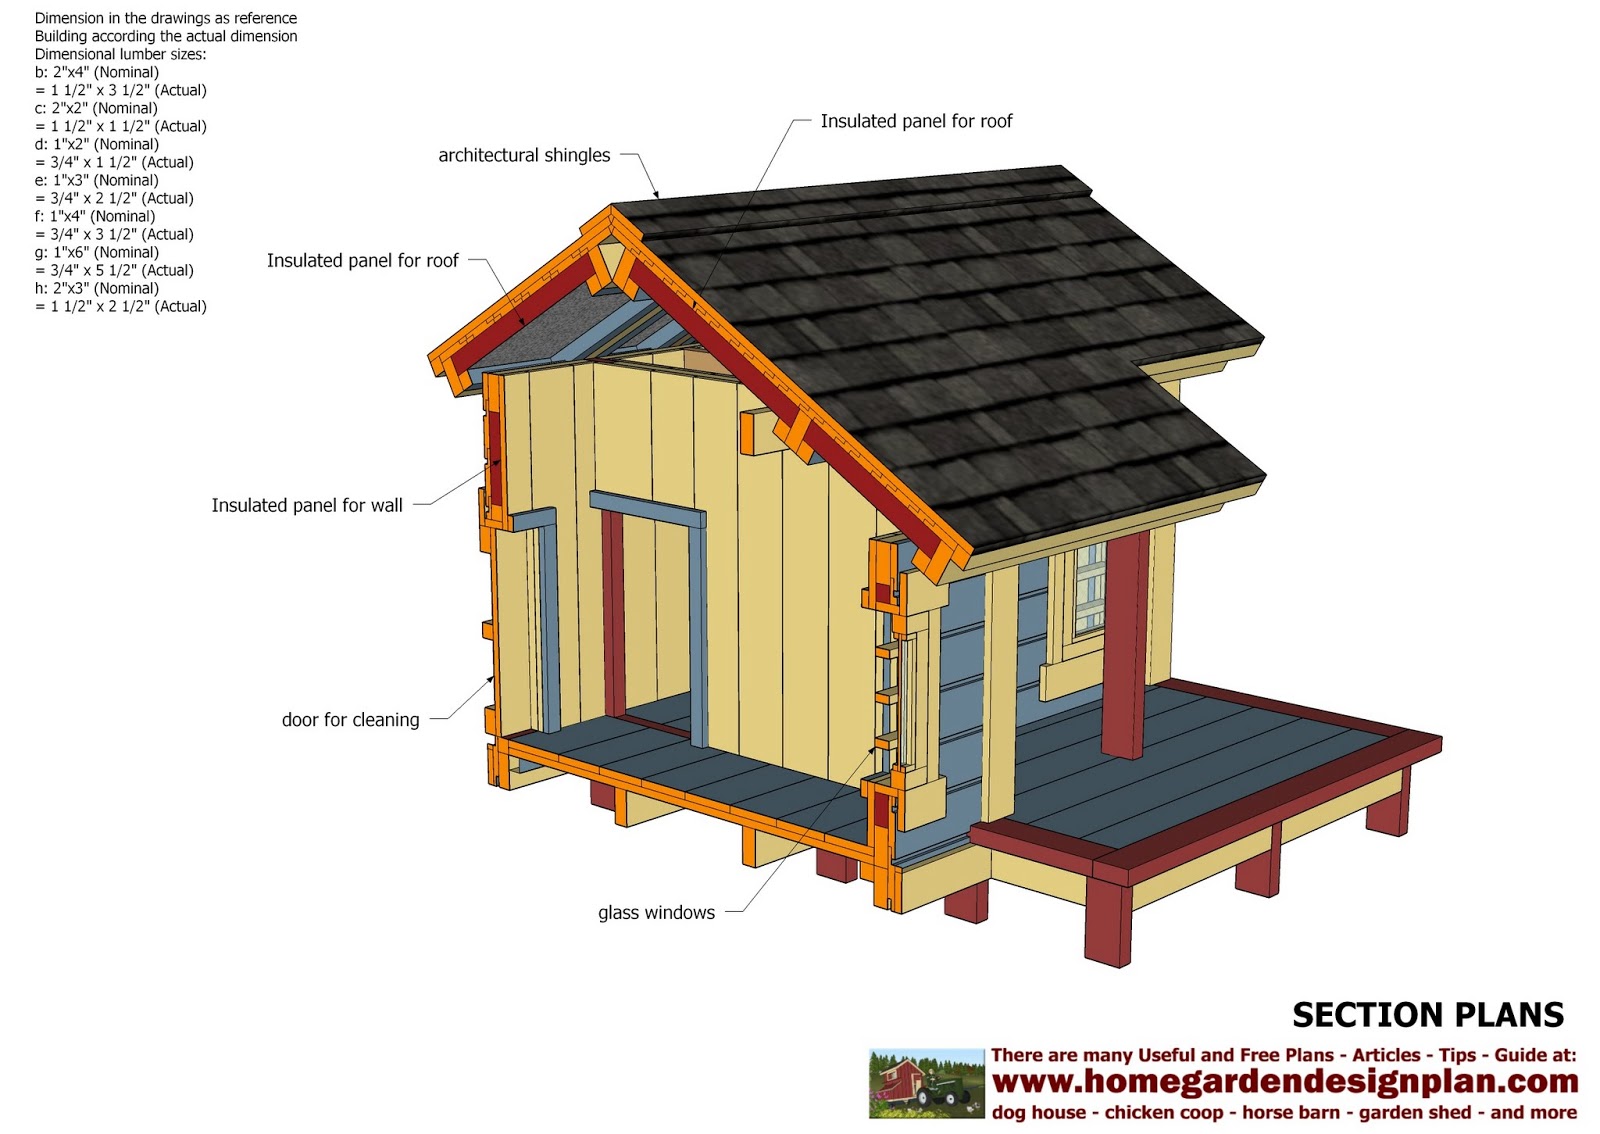 home garden plans: DH303 - Dog house plans - Dog house ...